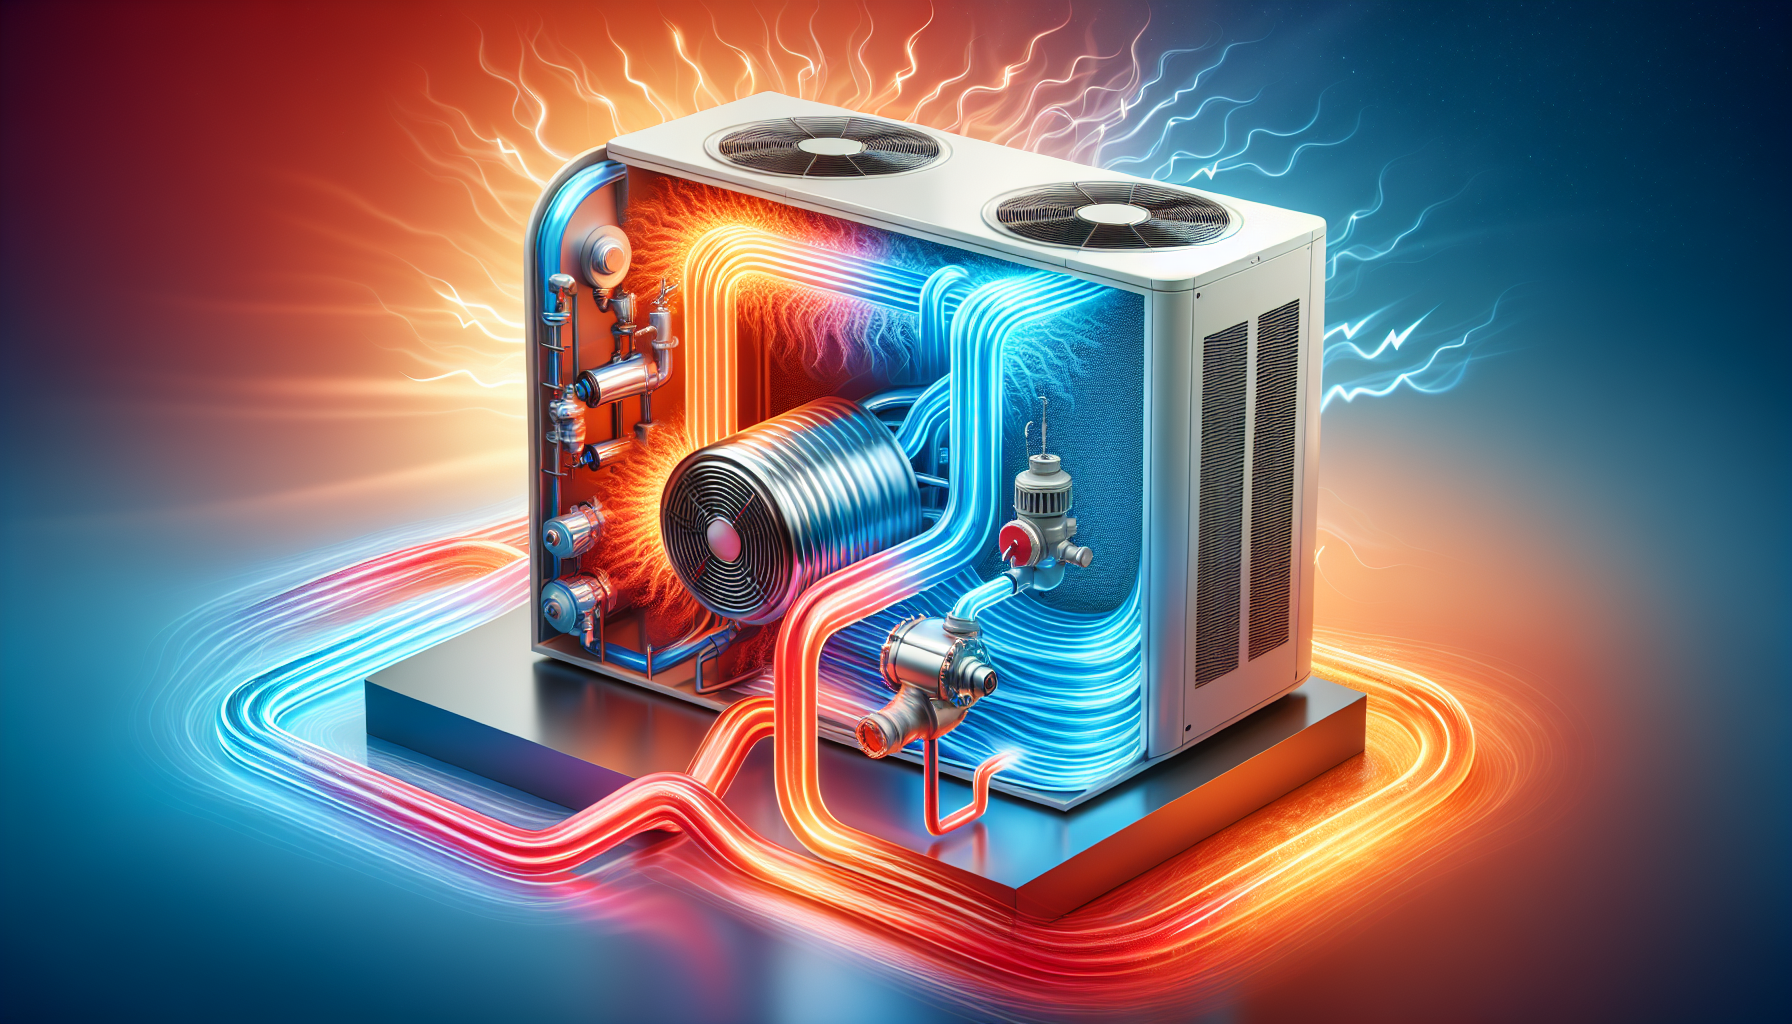 Illustration of heat pump technology